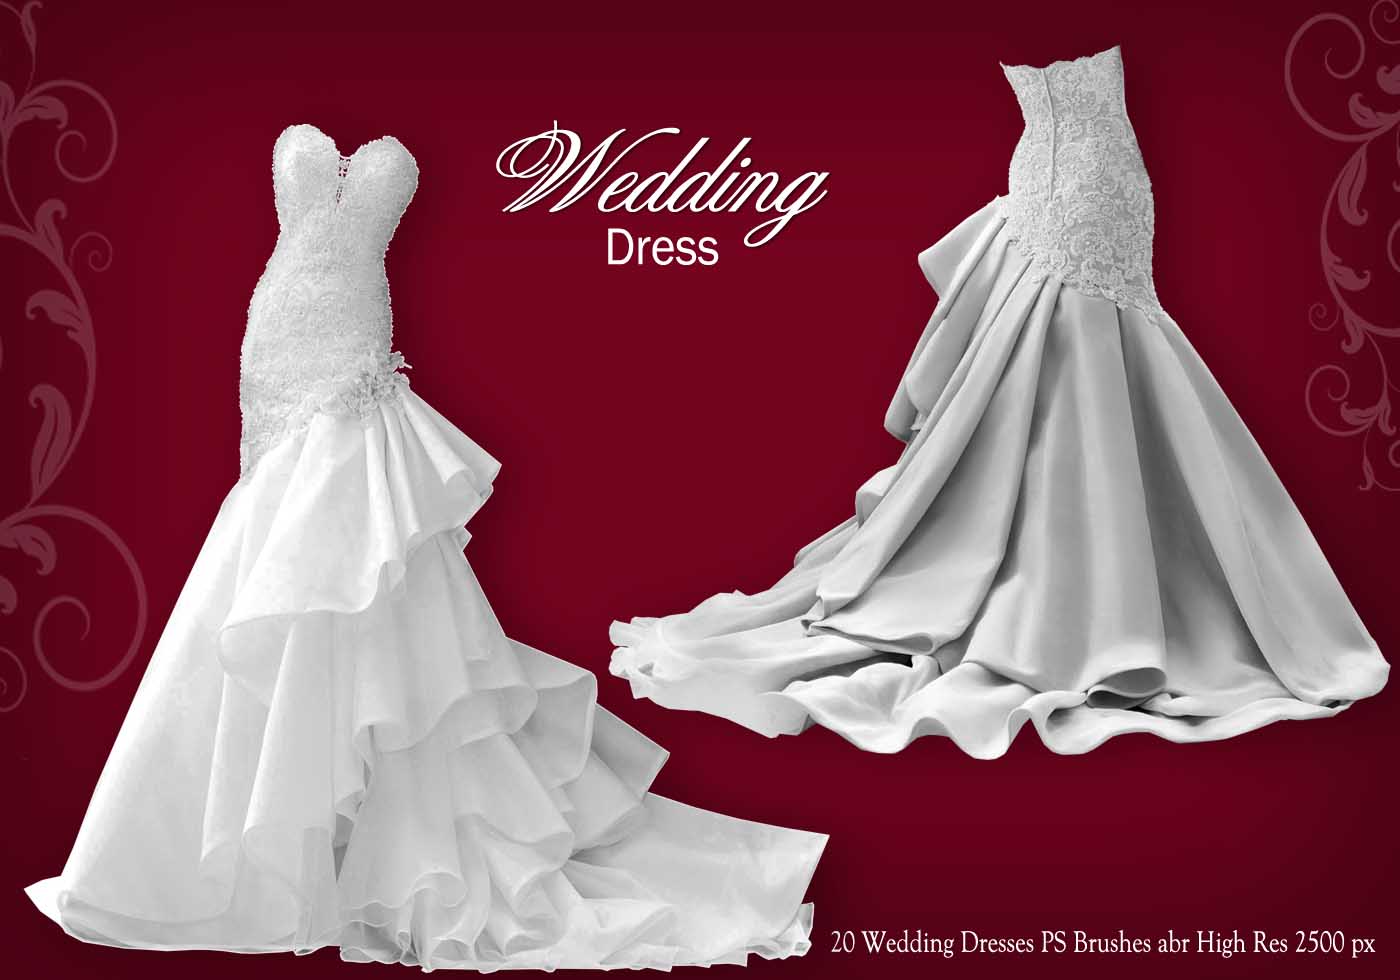 فرش فستان عروس زفاف فوتوشوب Wedding Dress Photoshop Brushes 